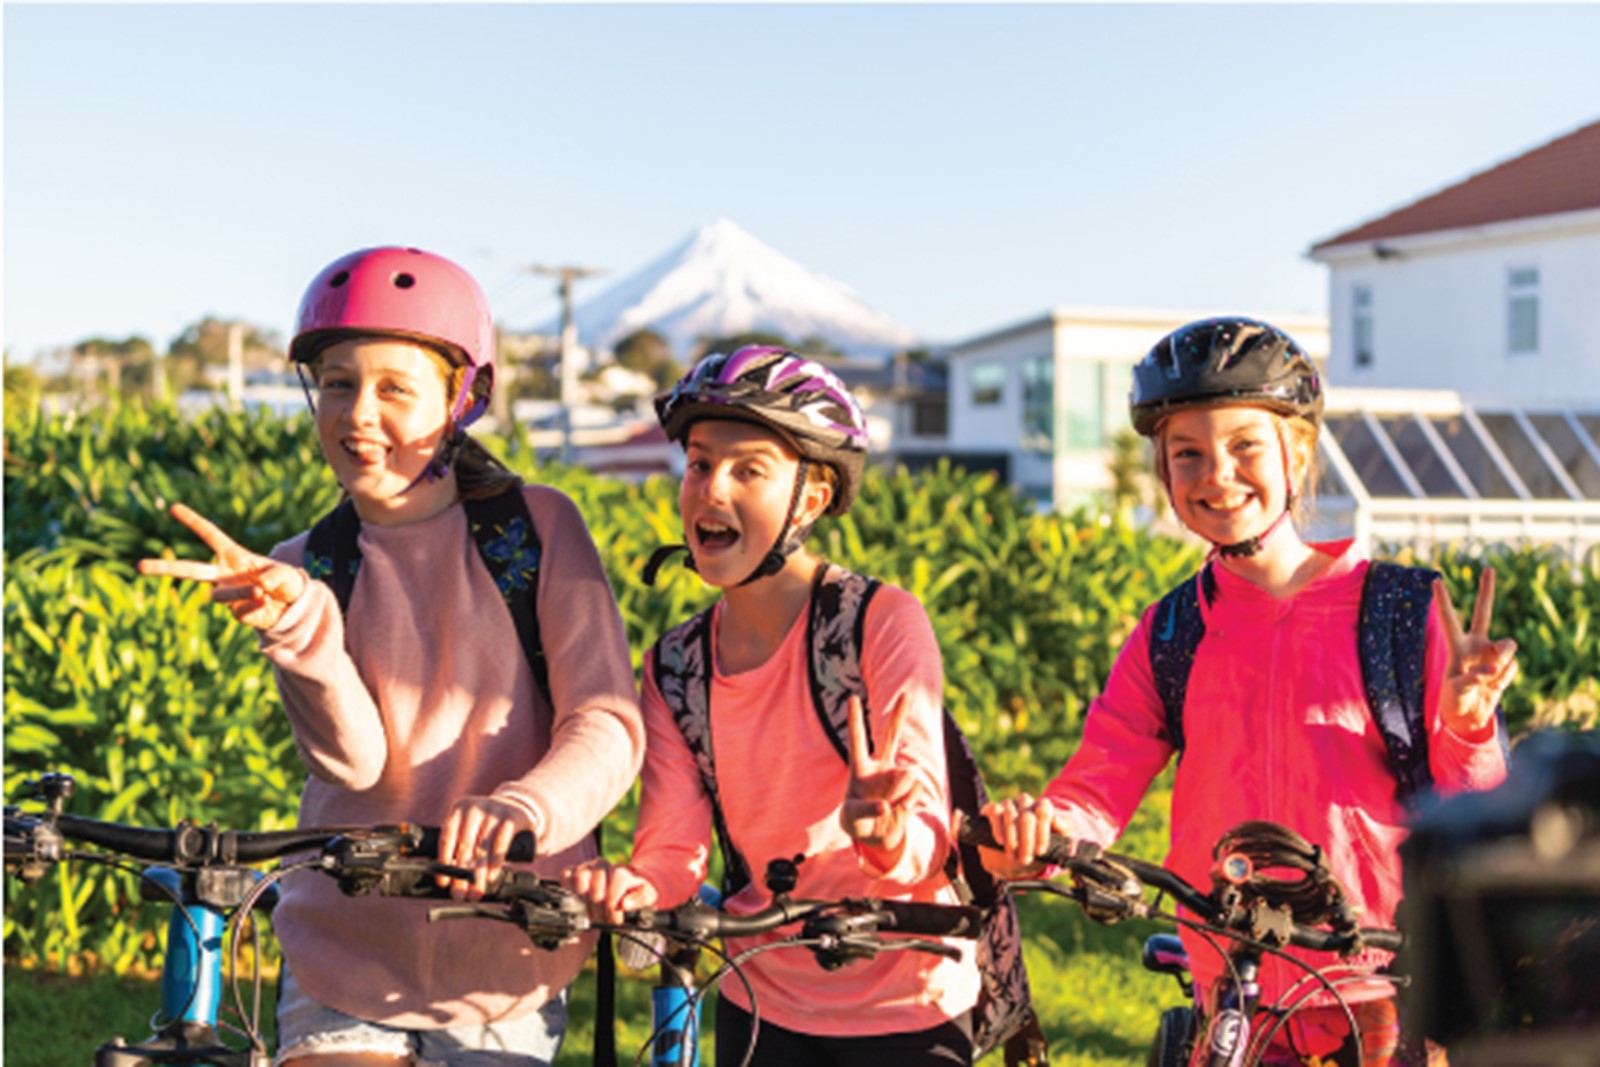 Three girls biking to school